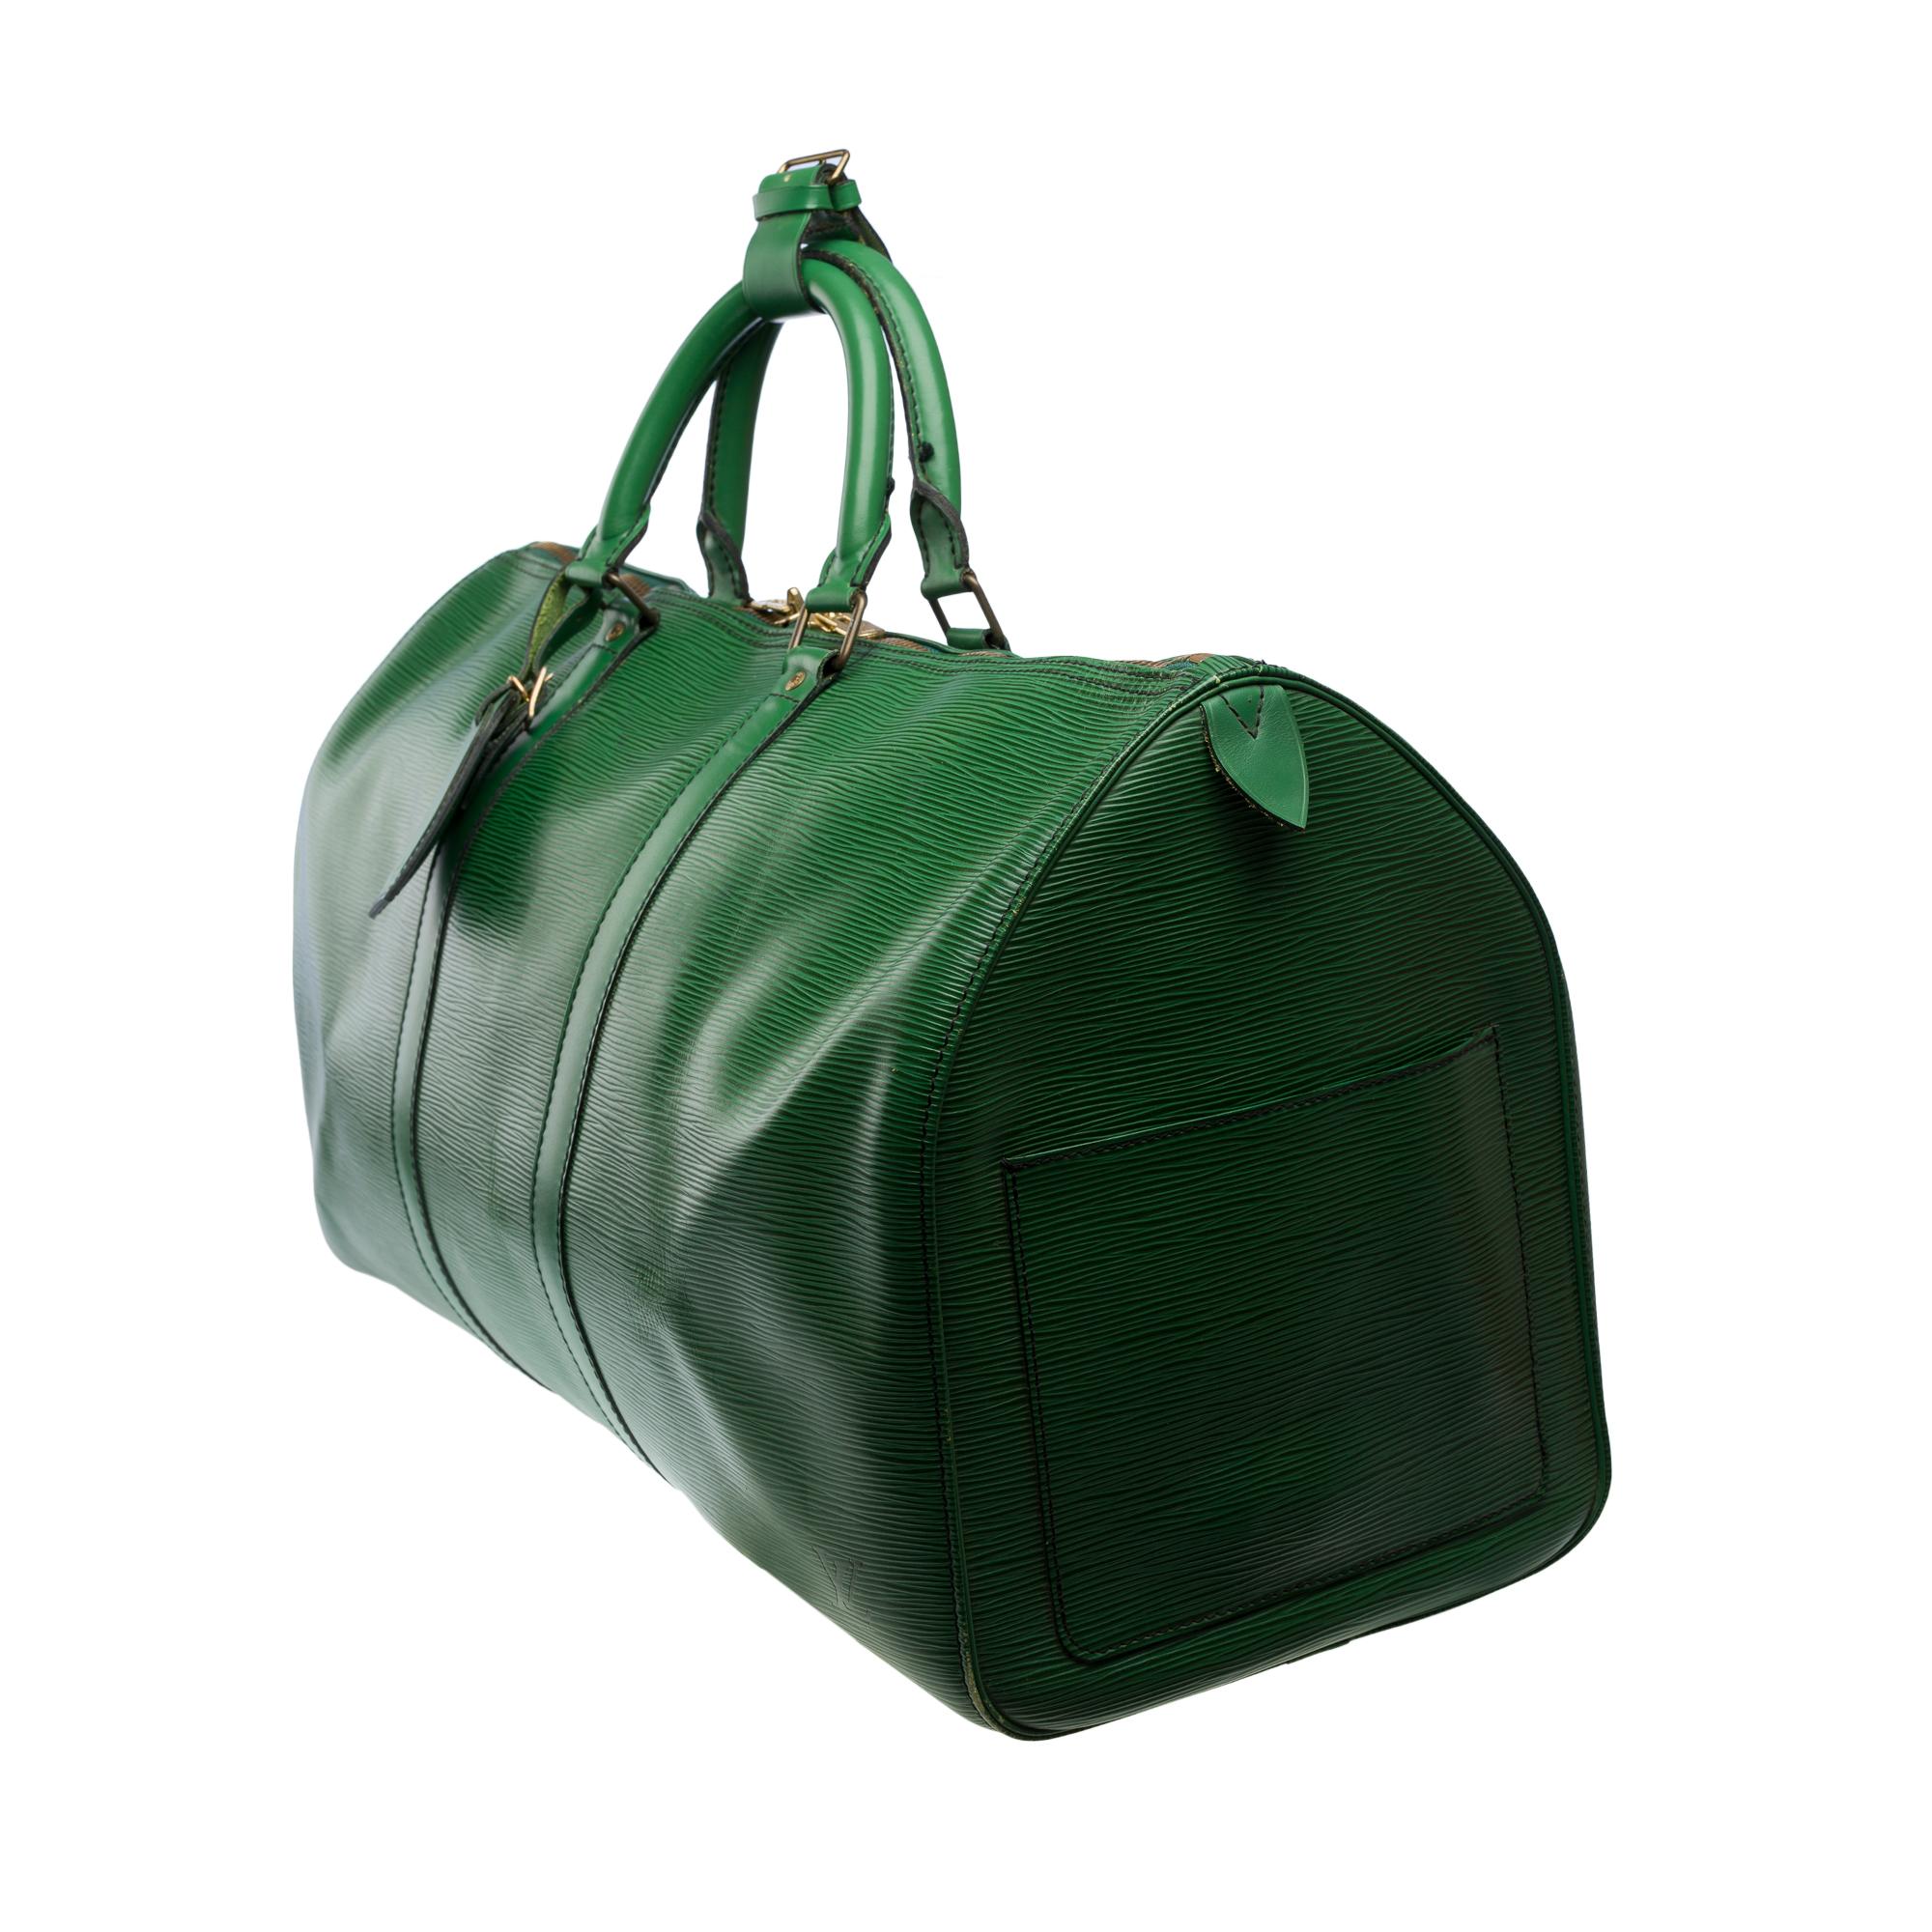 Women's or Men's Louis Vuitton Keepall 50 Travel bag in Green épi leather, GHW